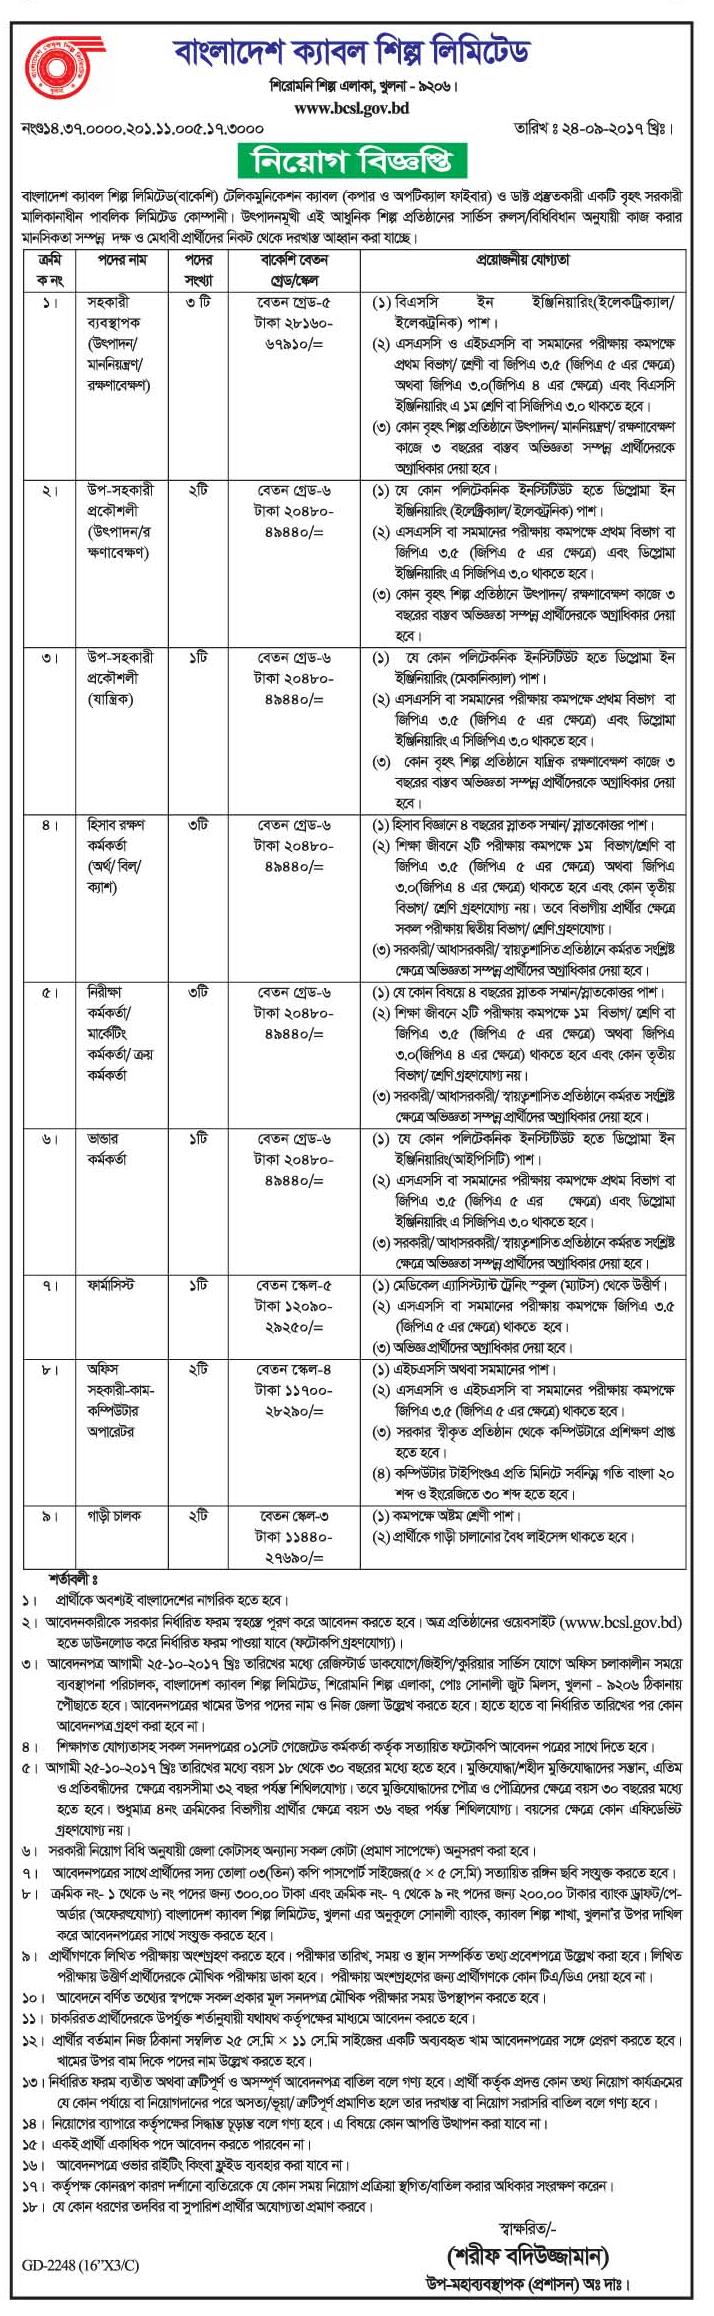 Bangladesh Cable Shilpa Limited Job Circular 2017